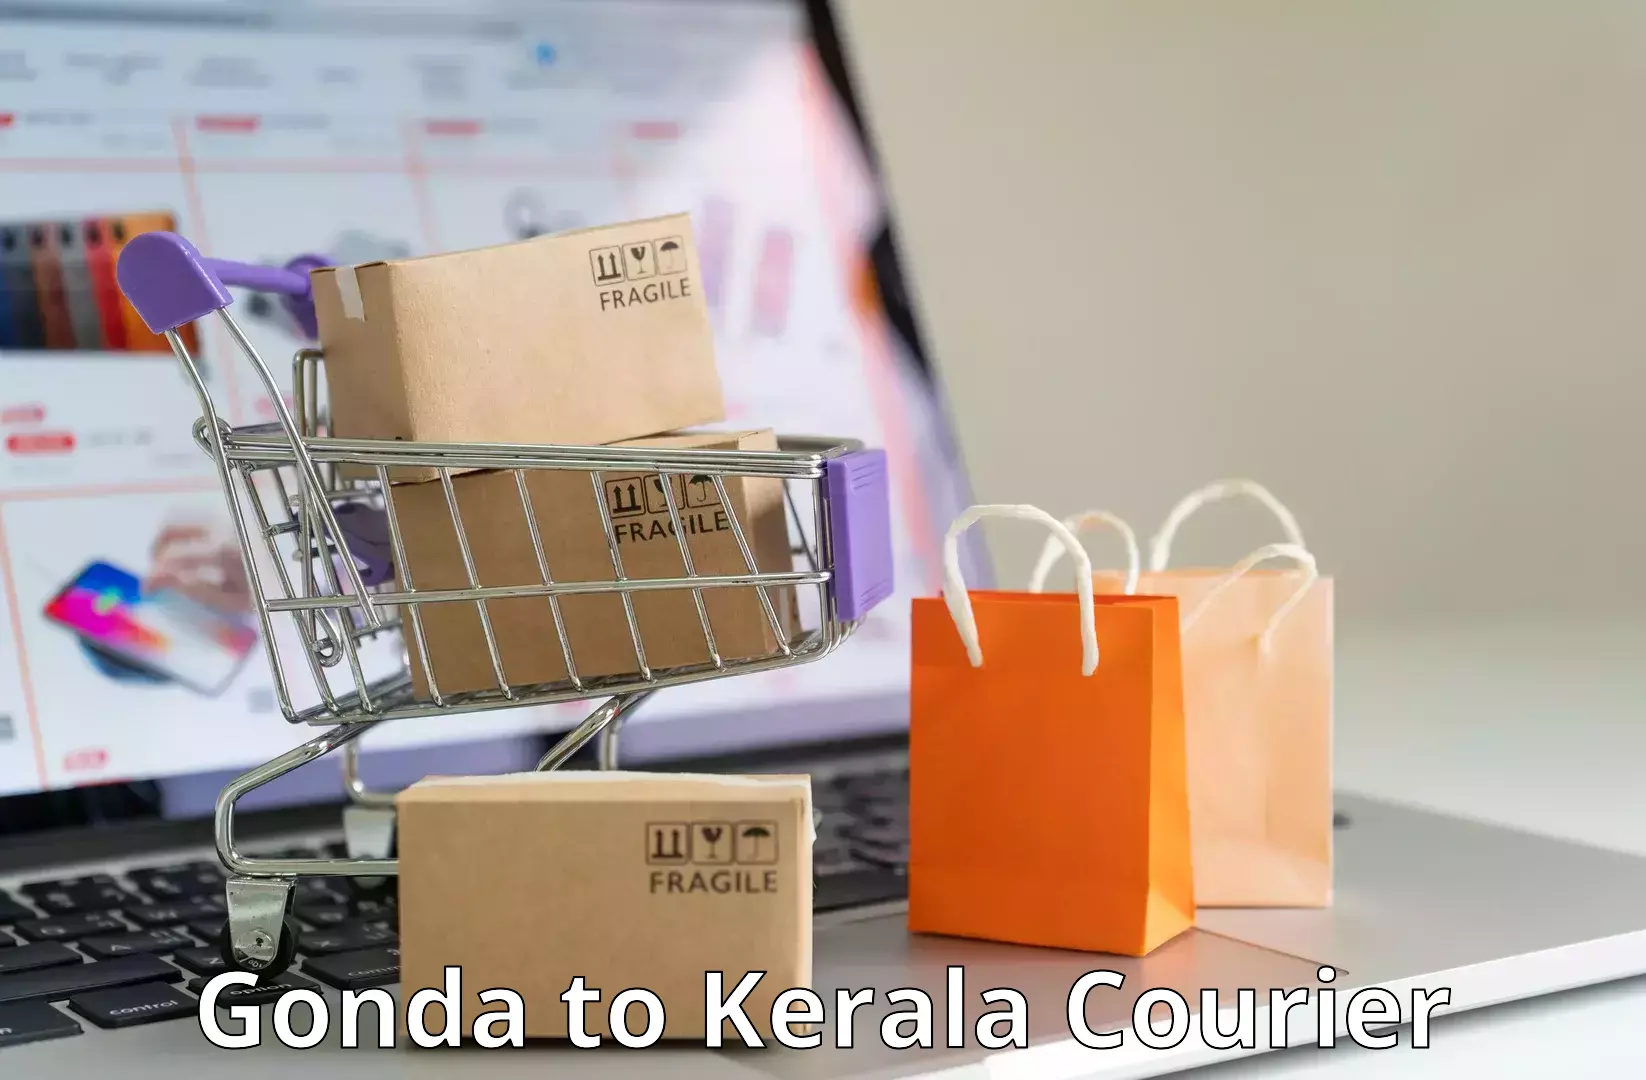 Modern courier technology Gonda to Kerala